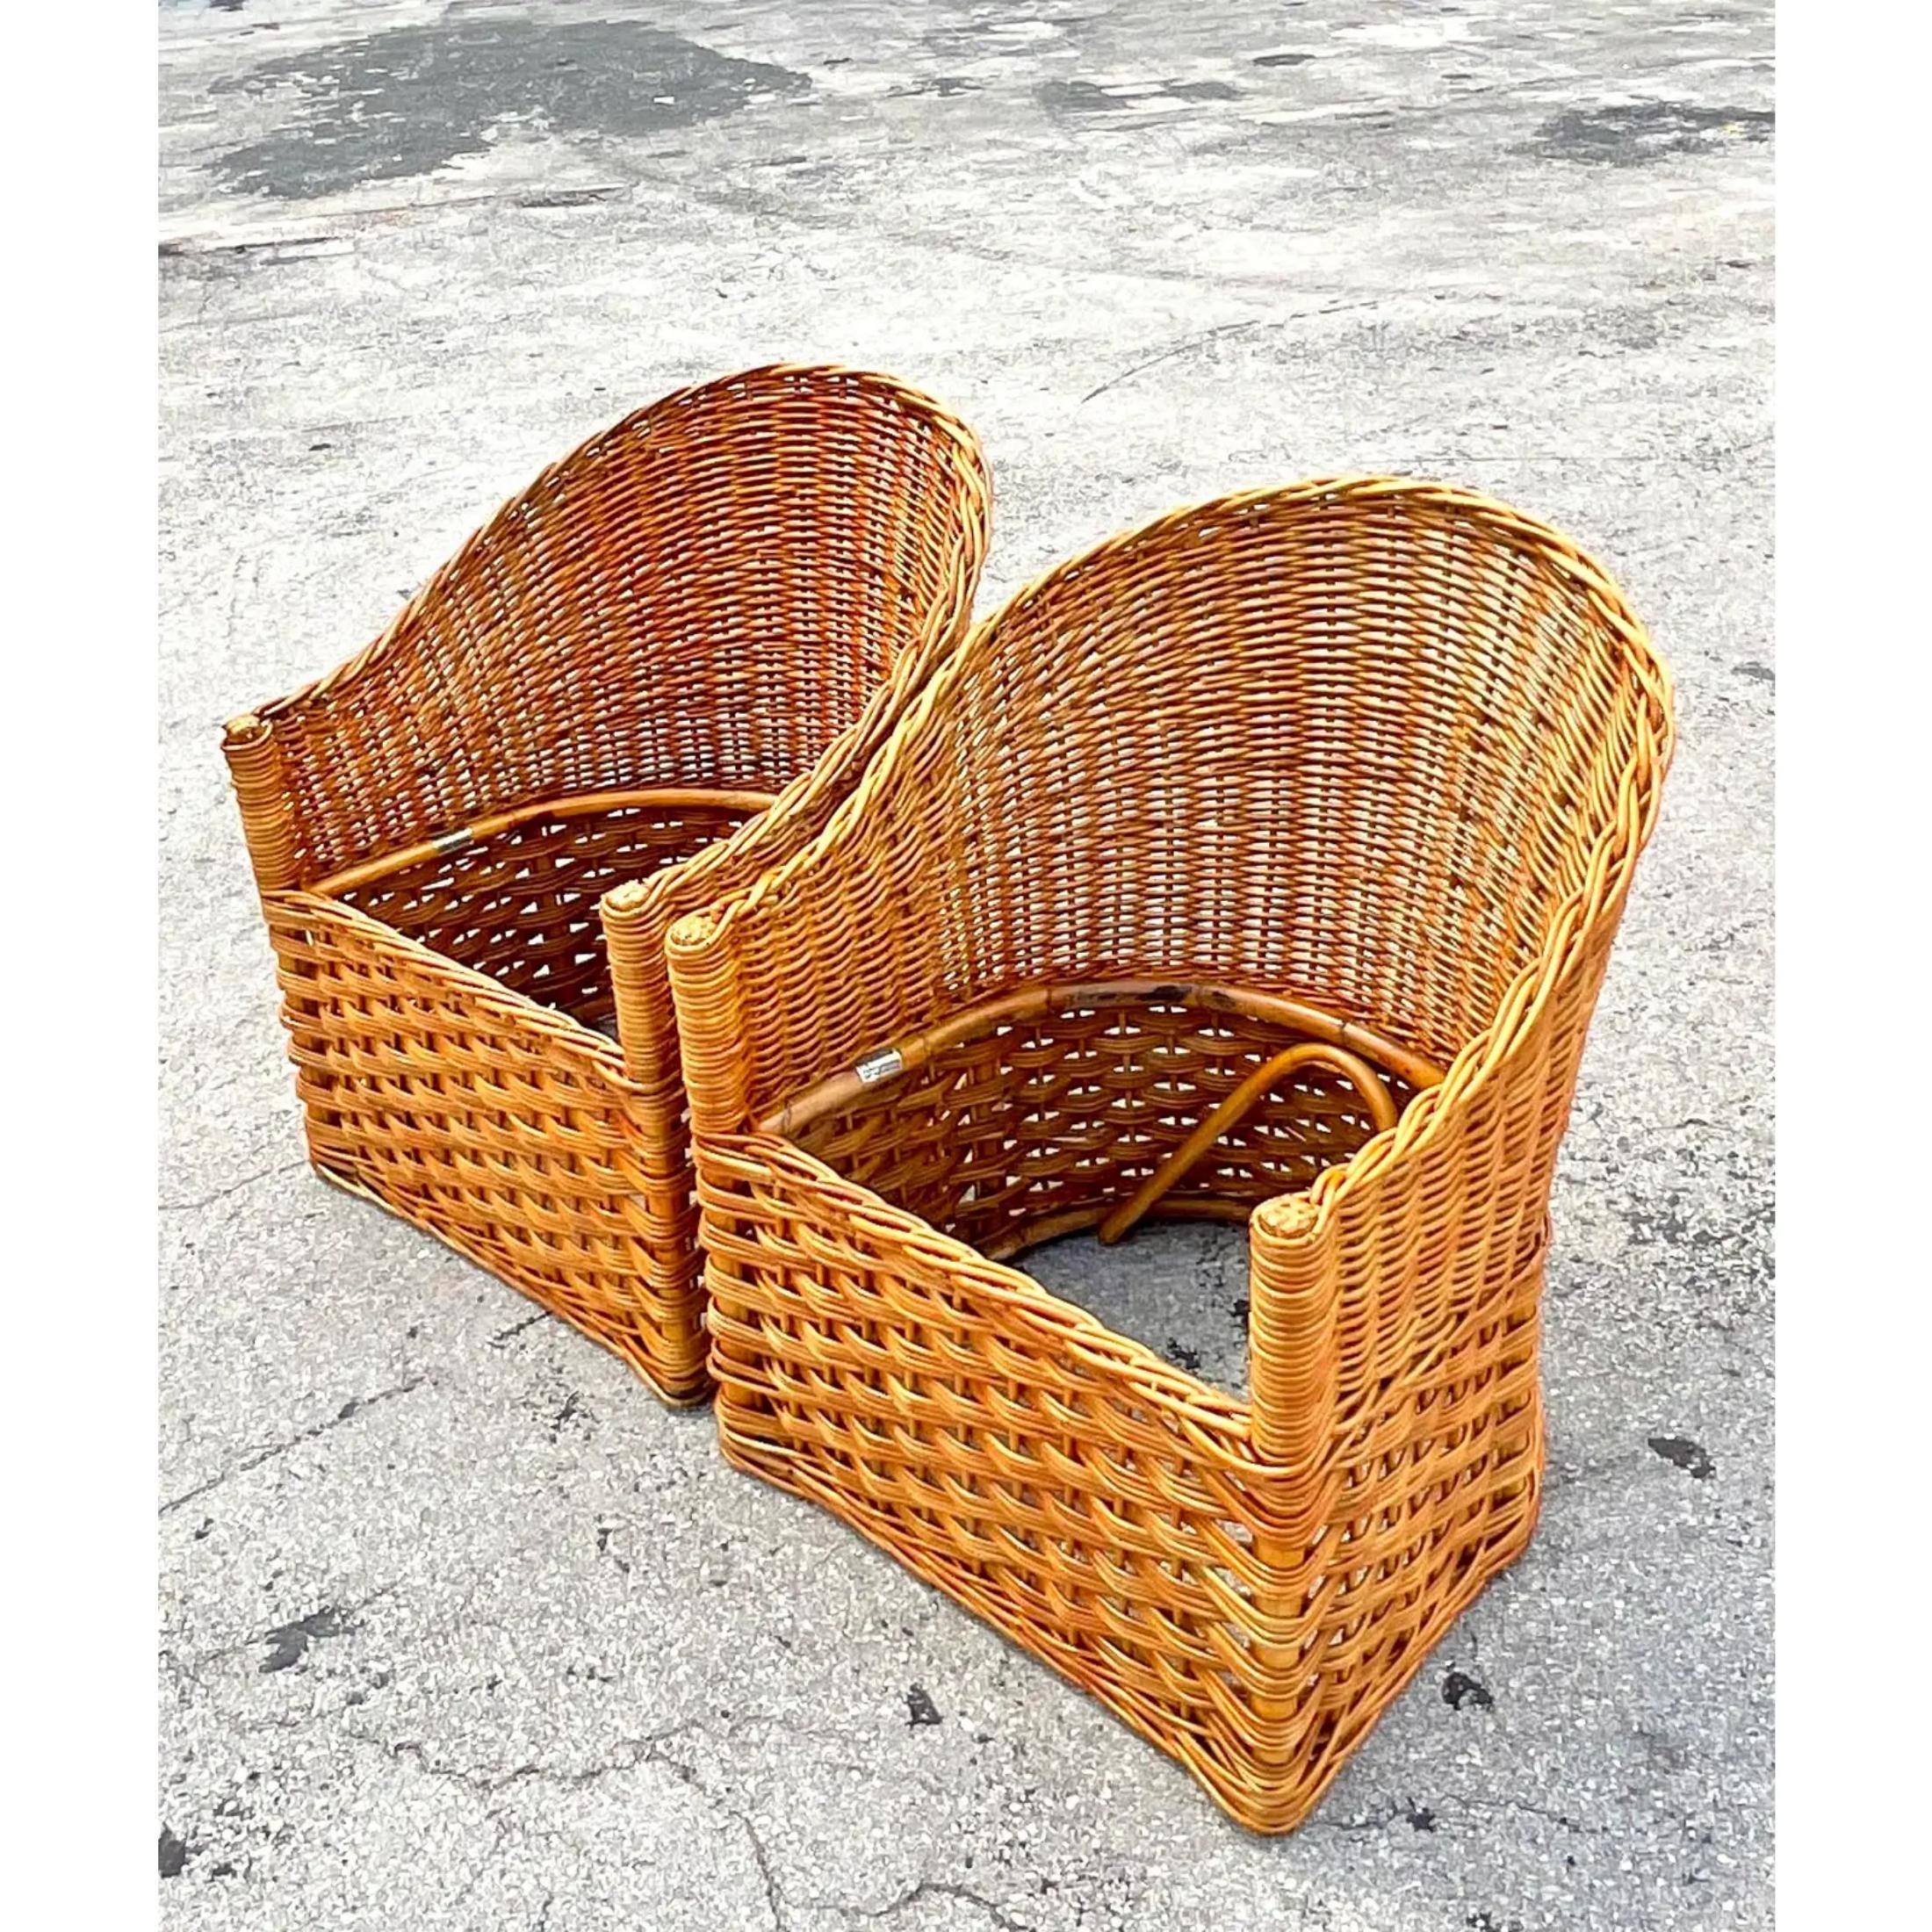 Bohemian Vintage Coastal Italian Wicker Works Tub Chairs - a Pair For Sale